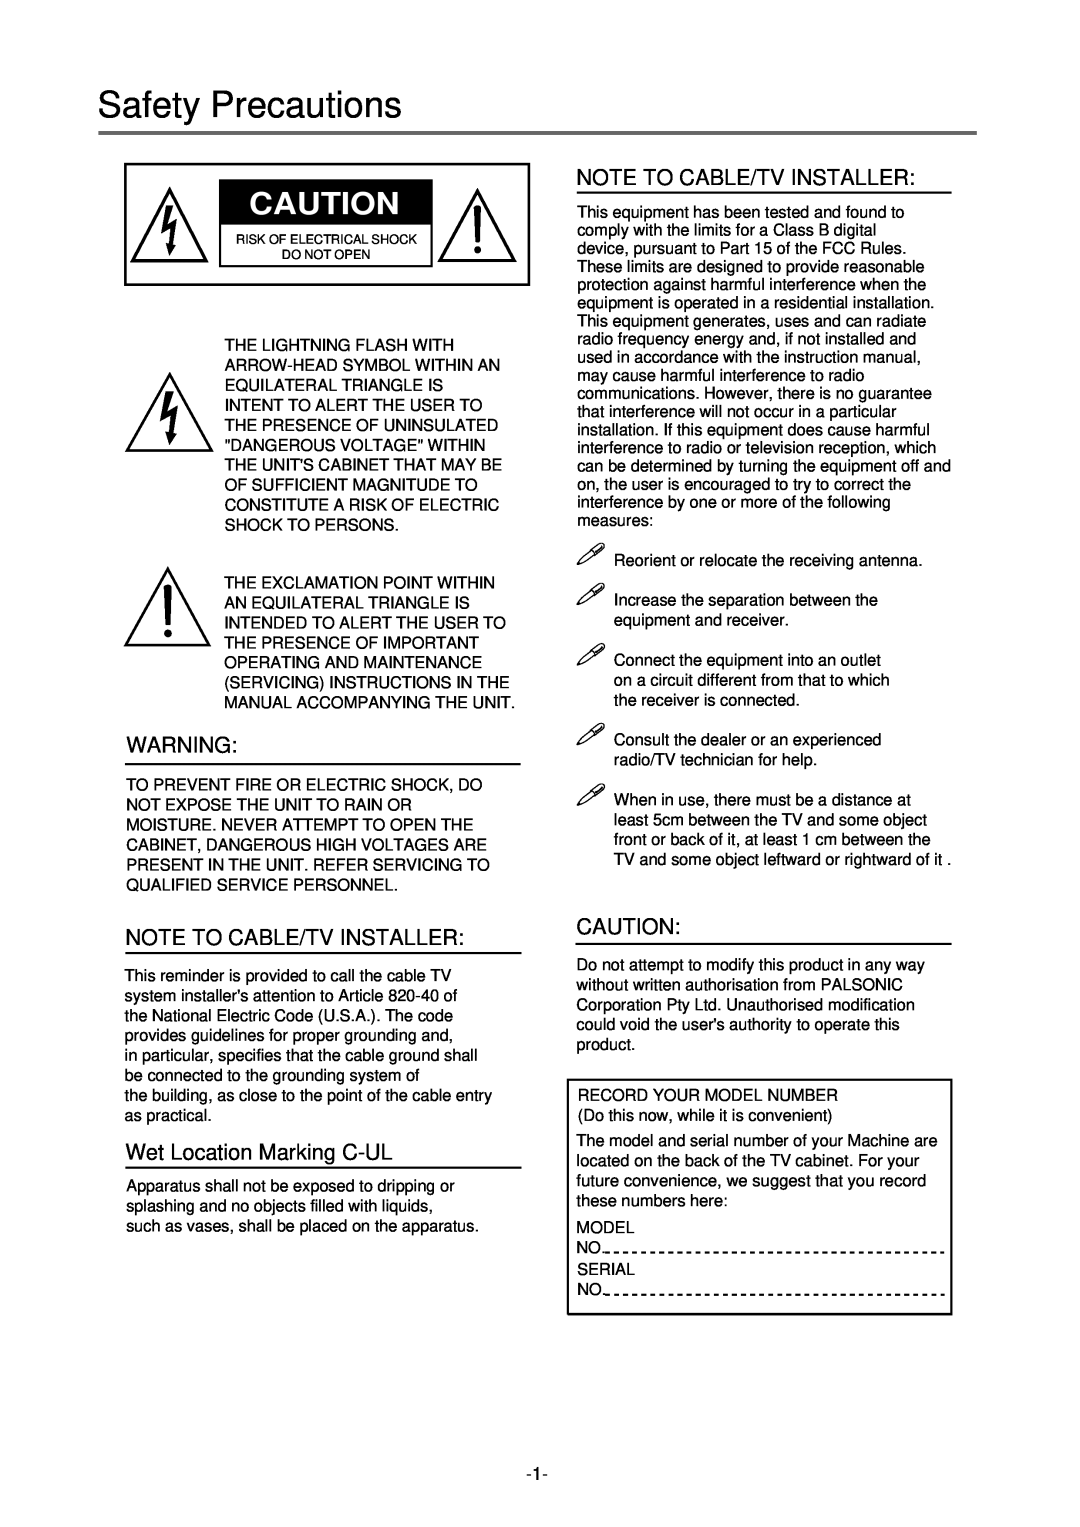 Palsonic TFTV-430 user manual Safety Precautions 